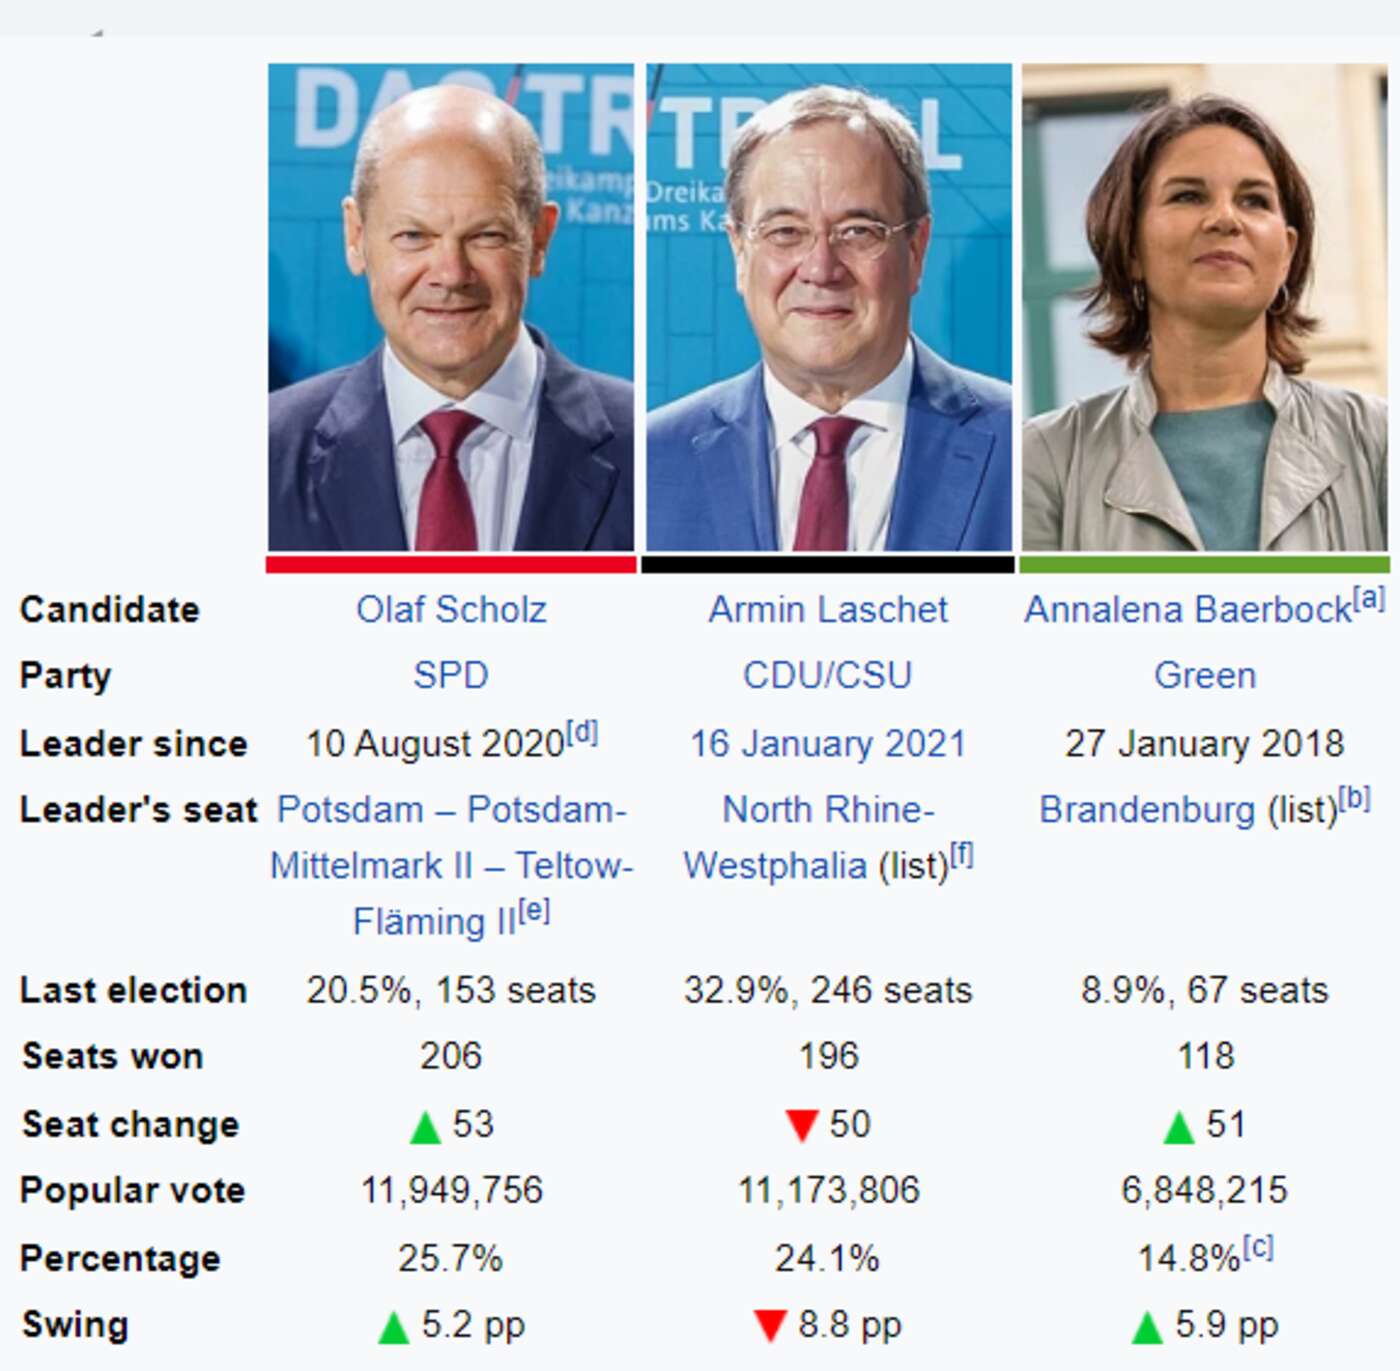 Image source: https://en.wikipedia.org/wiki/2021_German_federal_election